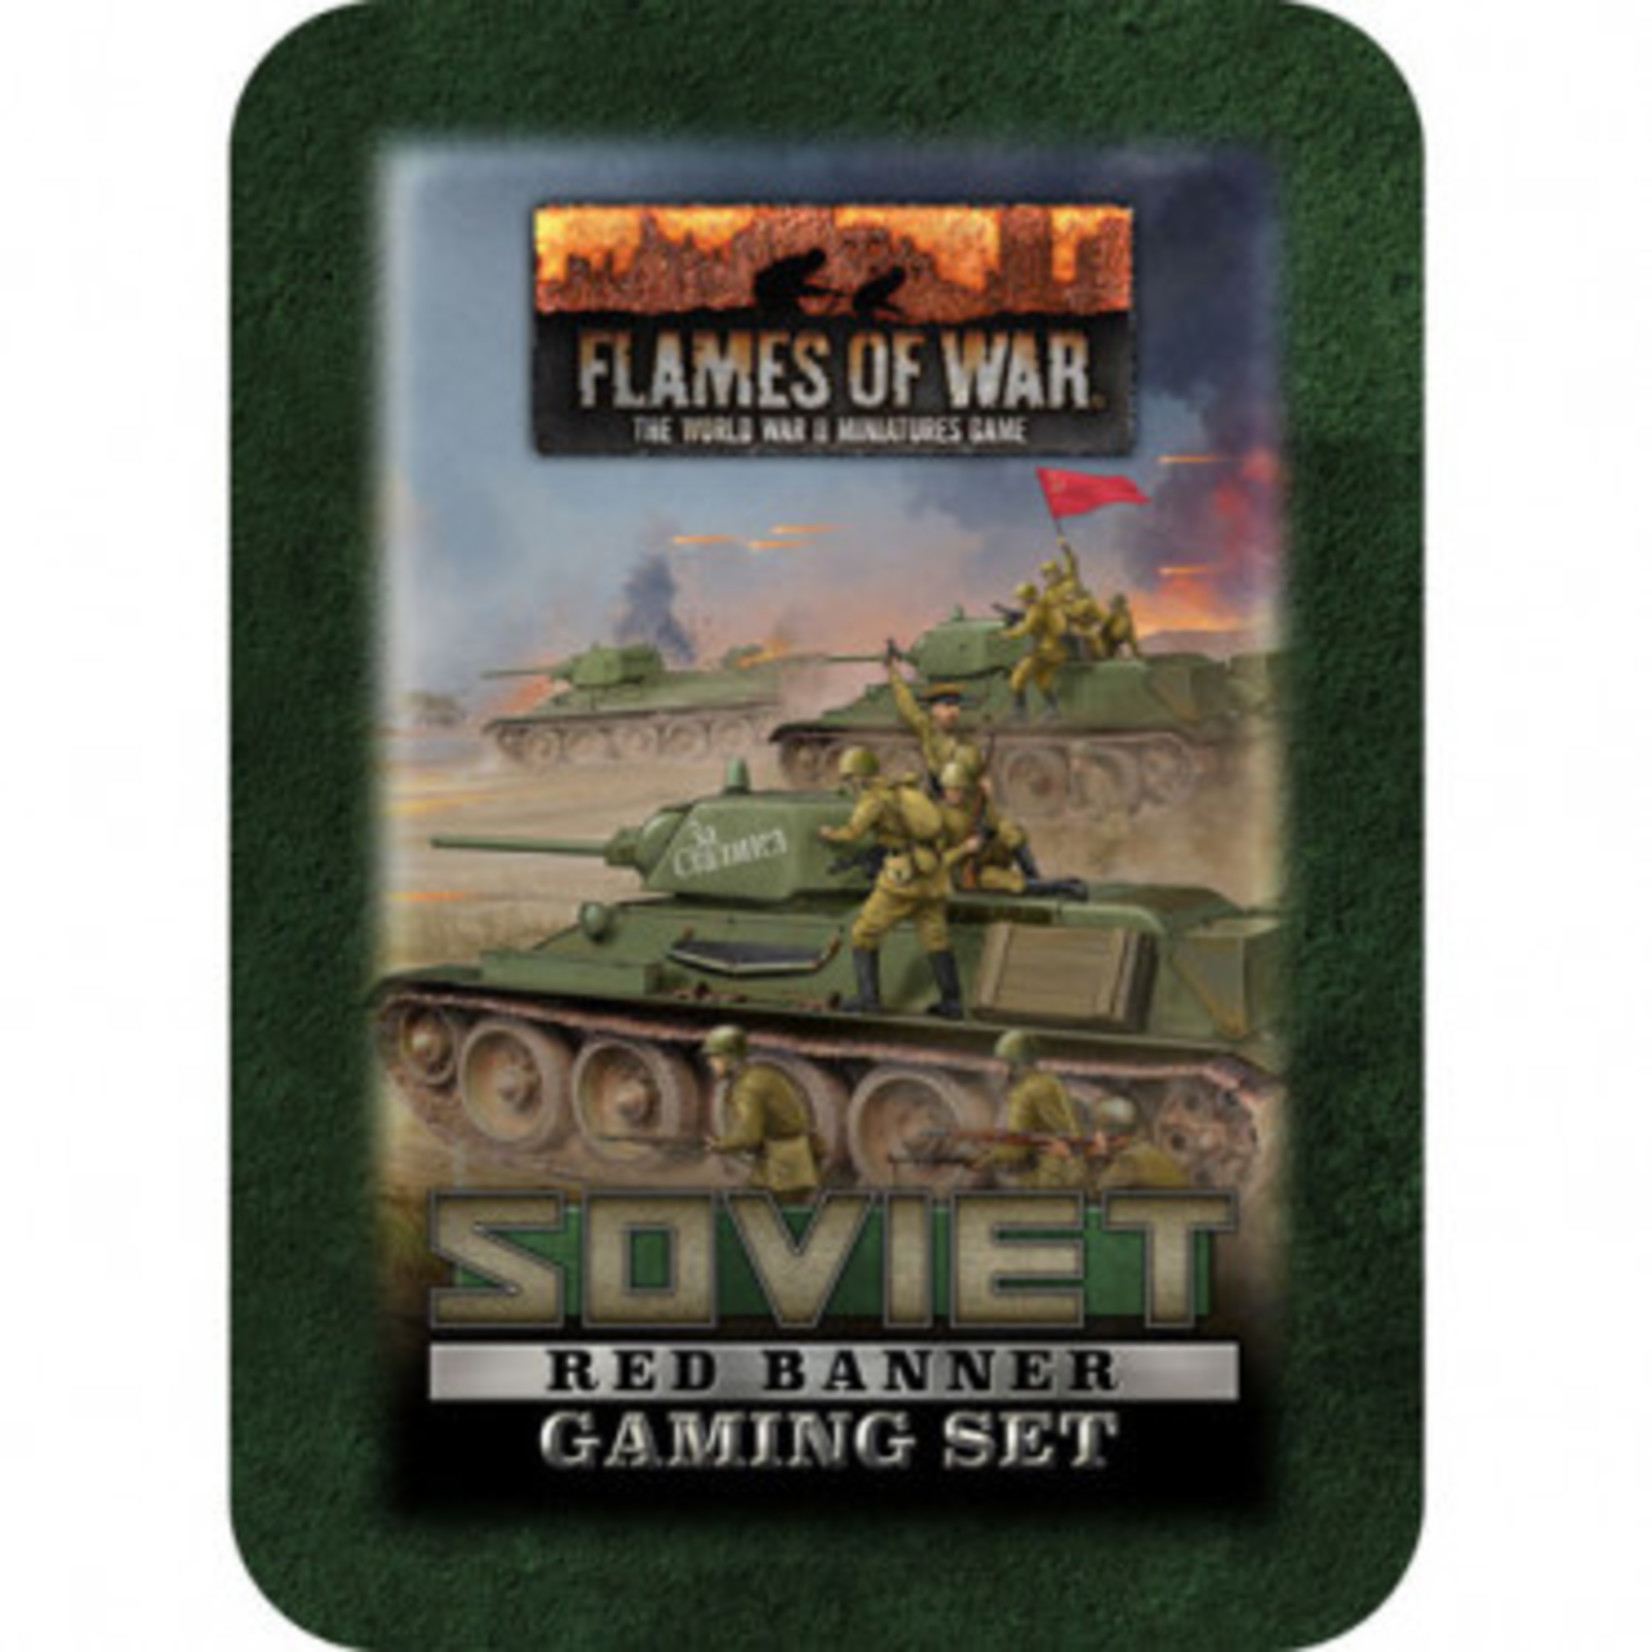 Flames of War Flames of War: Soviet: Red Banner Gaming Set